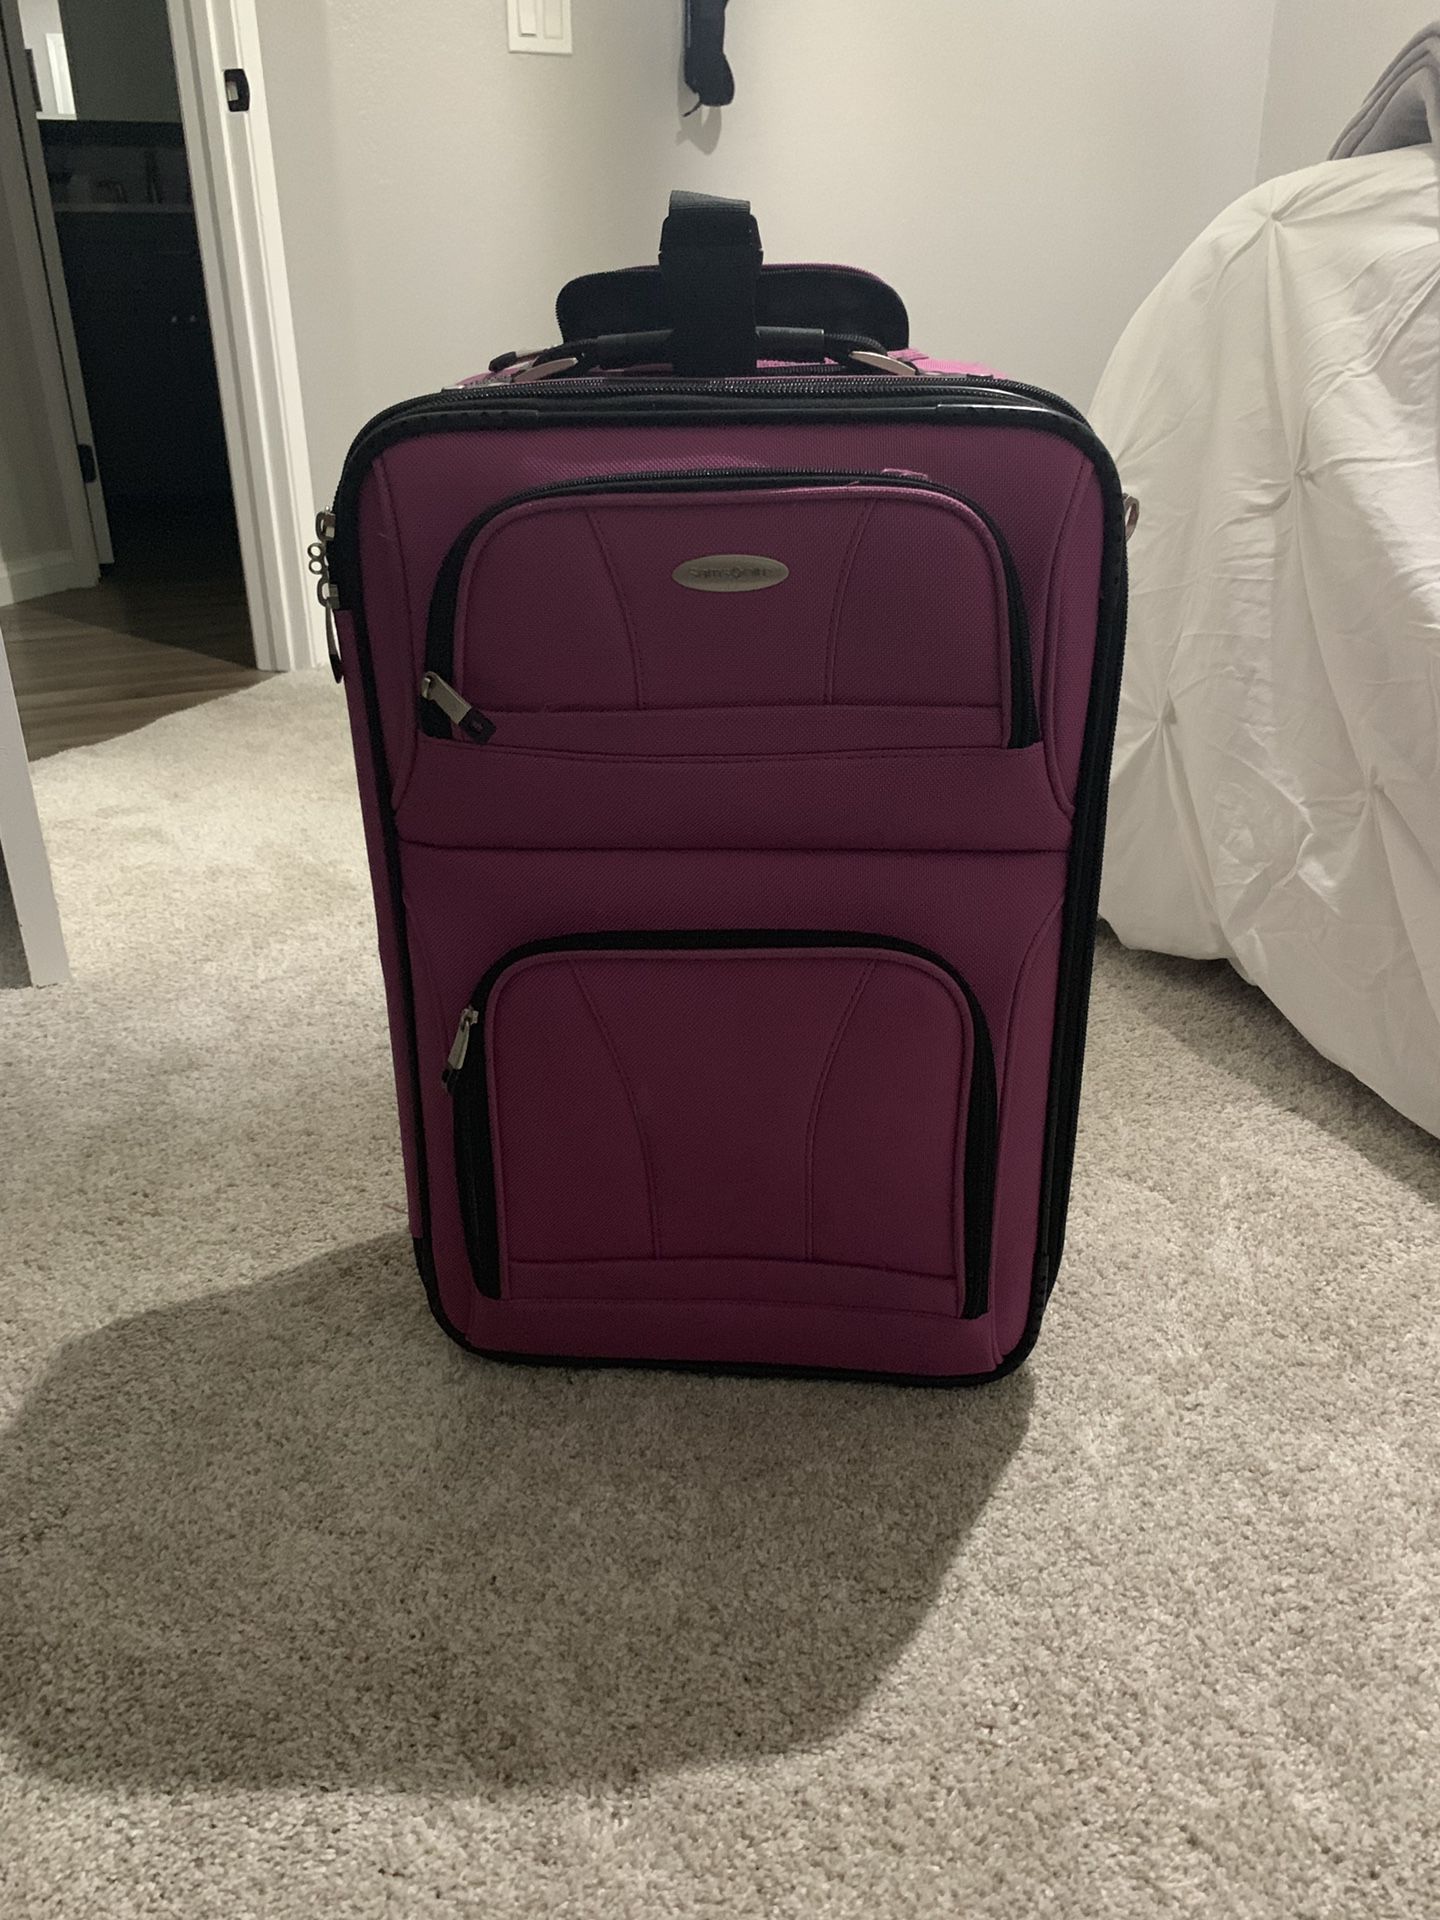 Samsonite carry-on luggage